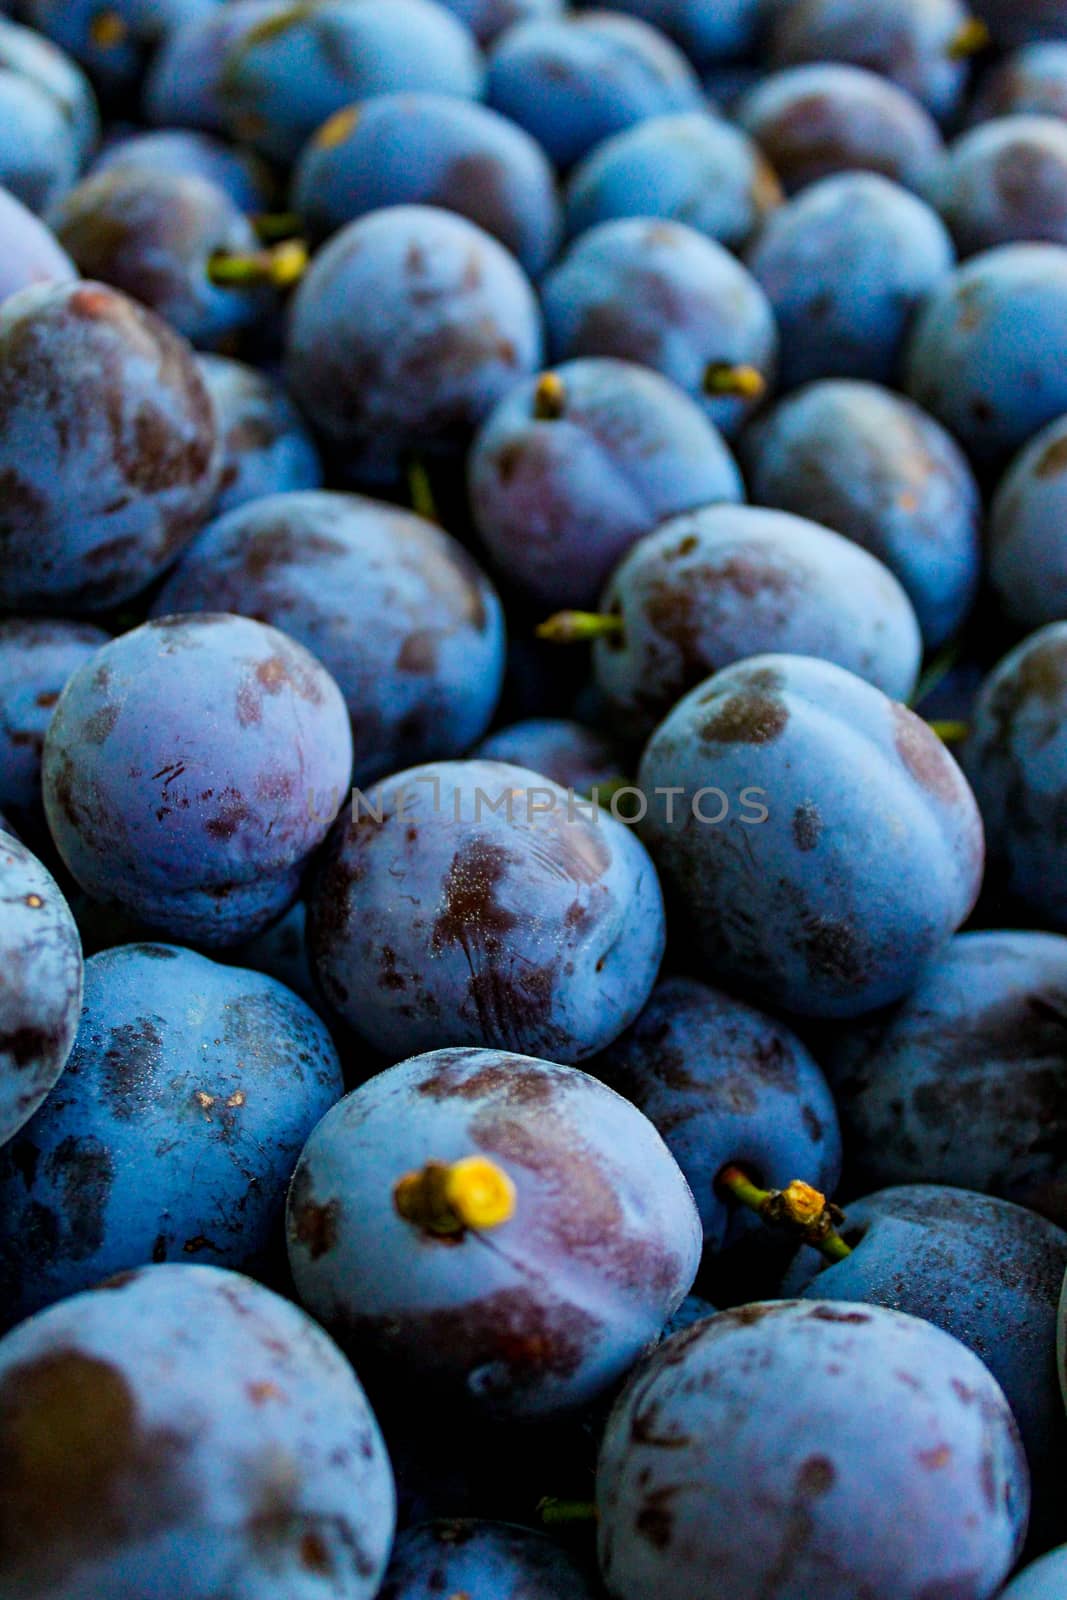 Bunch of fresh ripe plums. Zavidovici, Bosnia and Herzegovina.